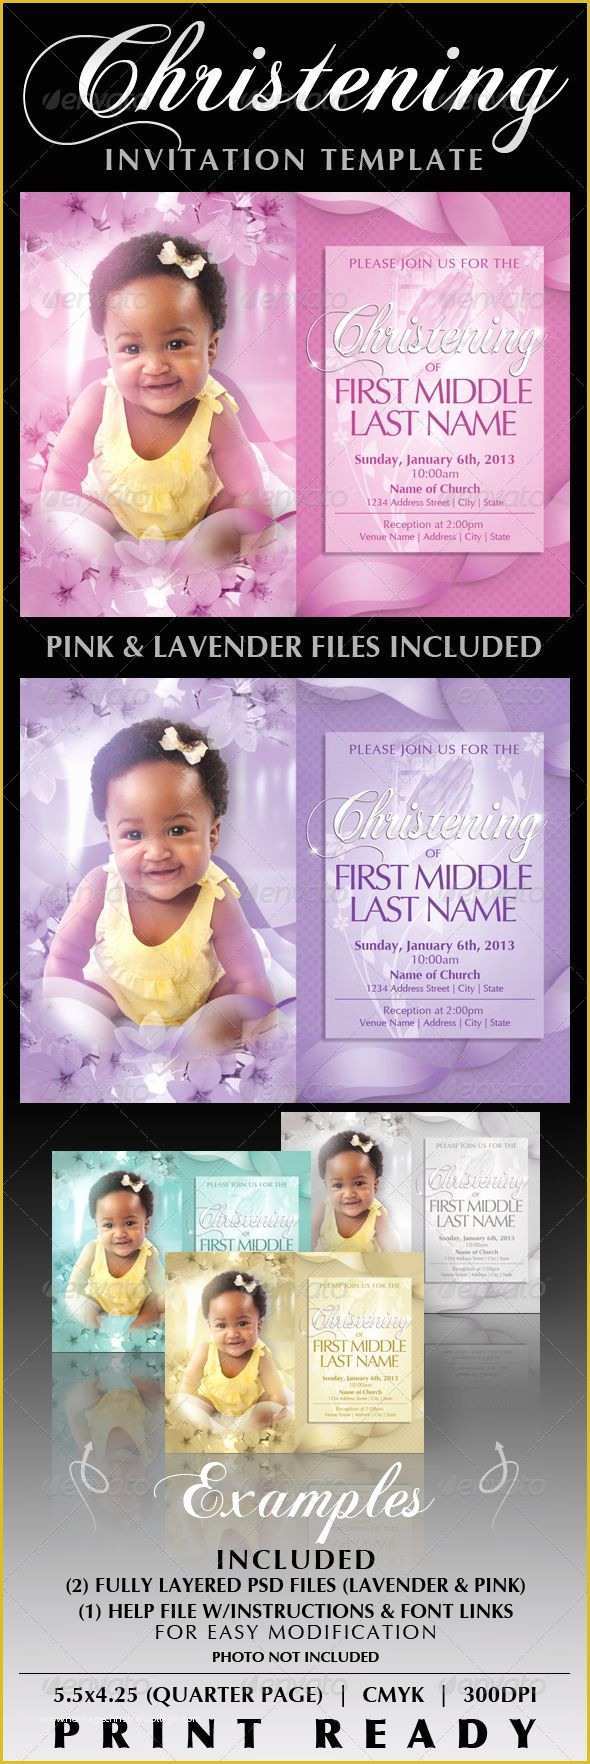 Free Bridal Shower Invitation Templates Photoshop Of Baby Christening Invitation Templates